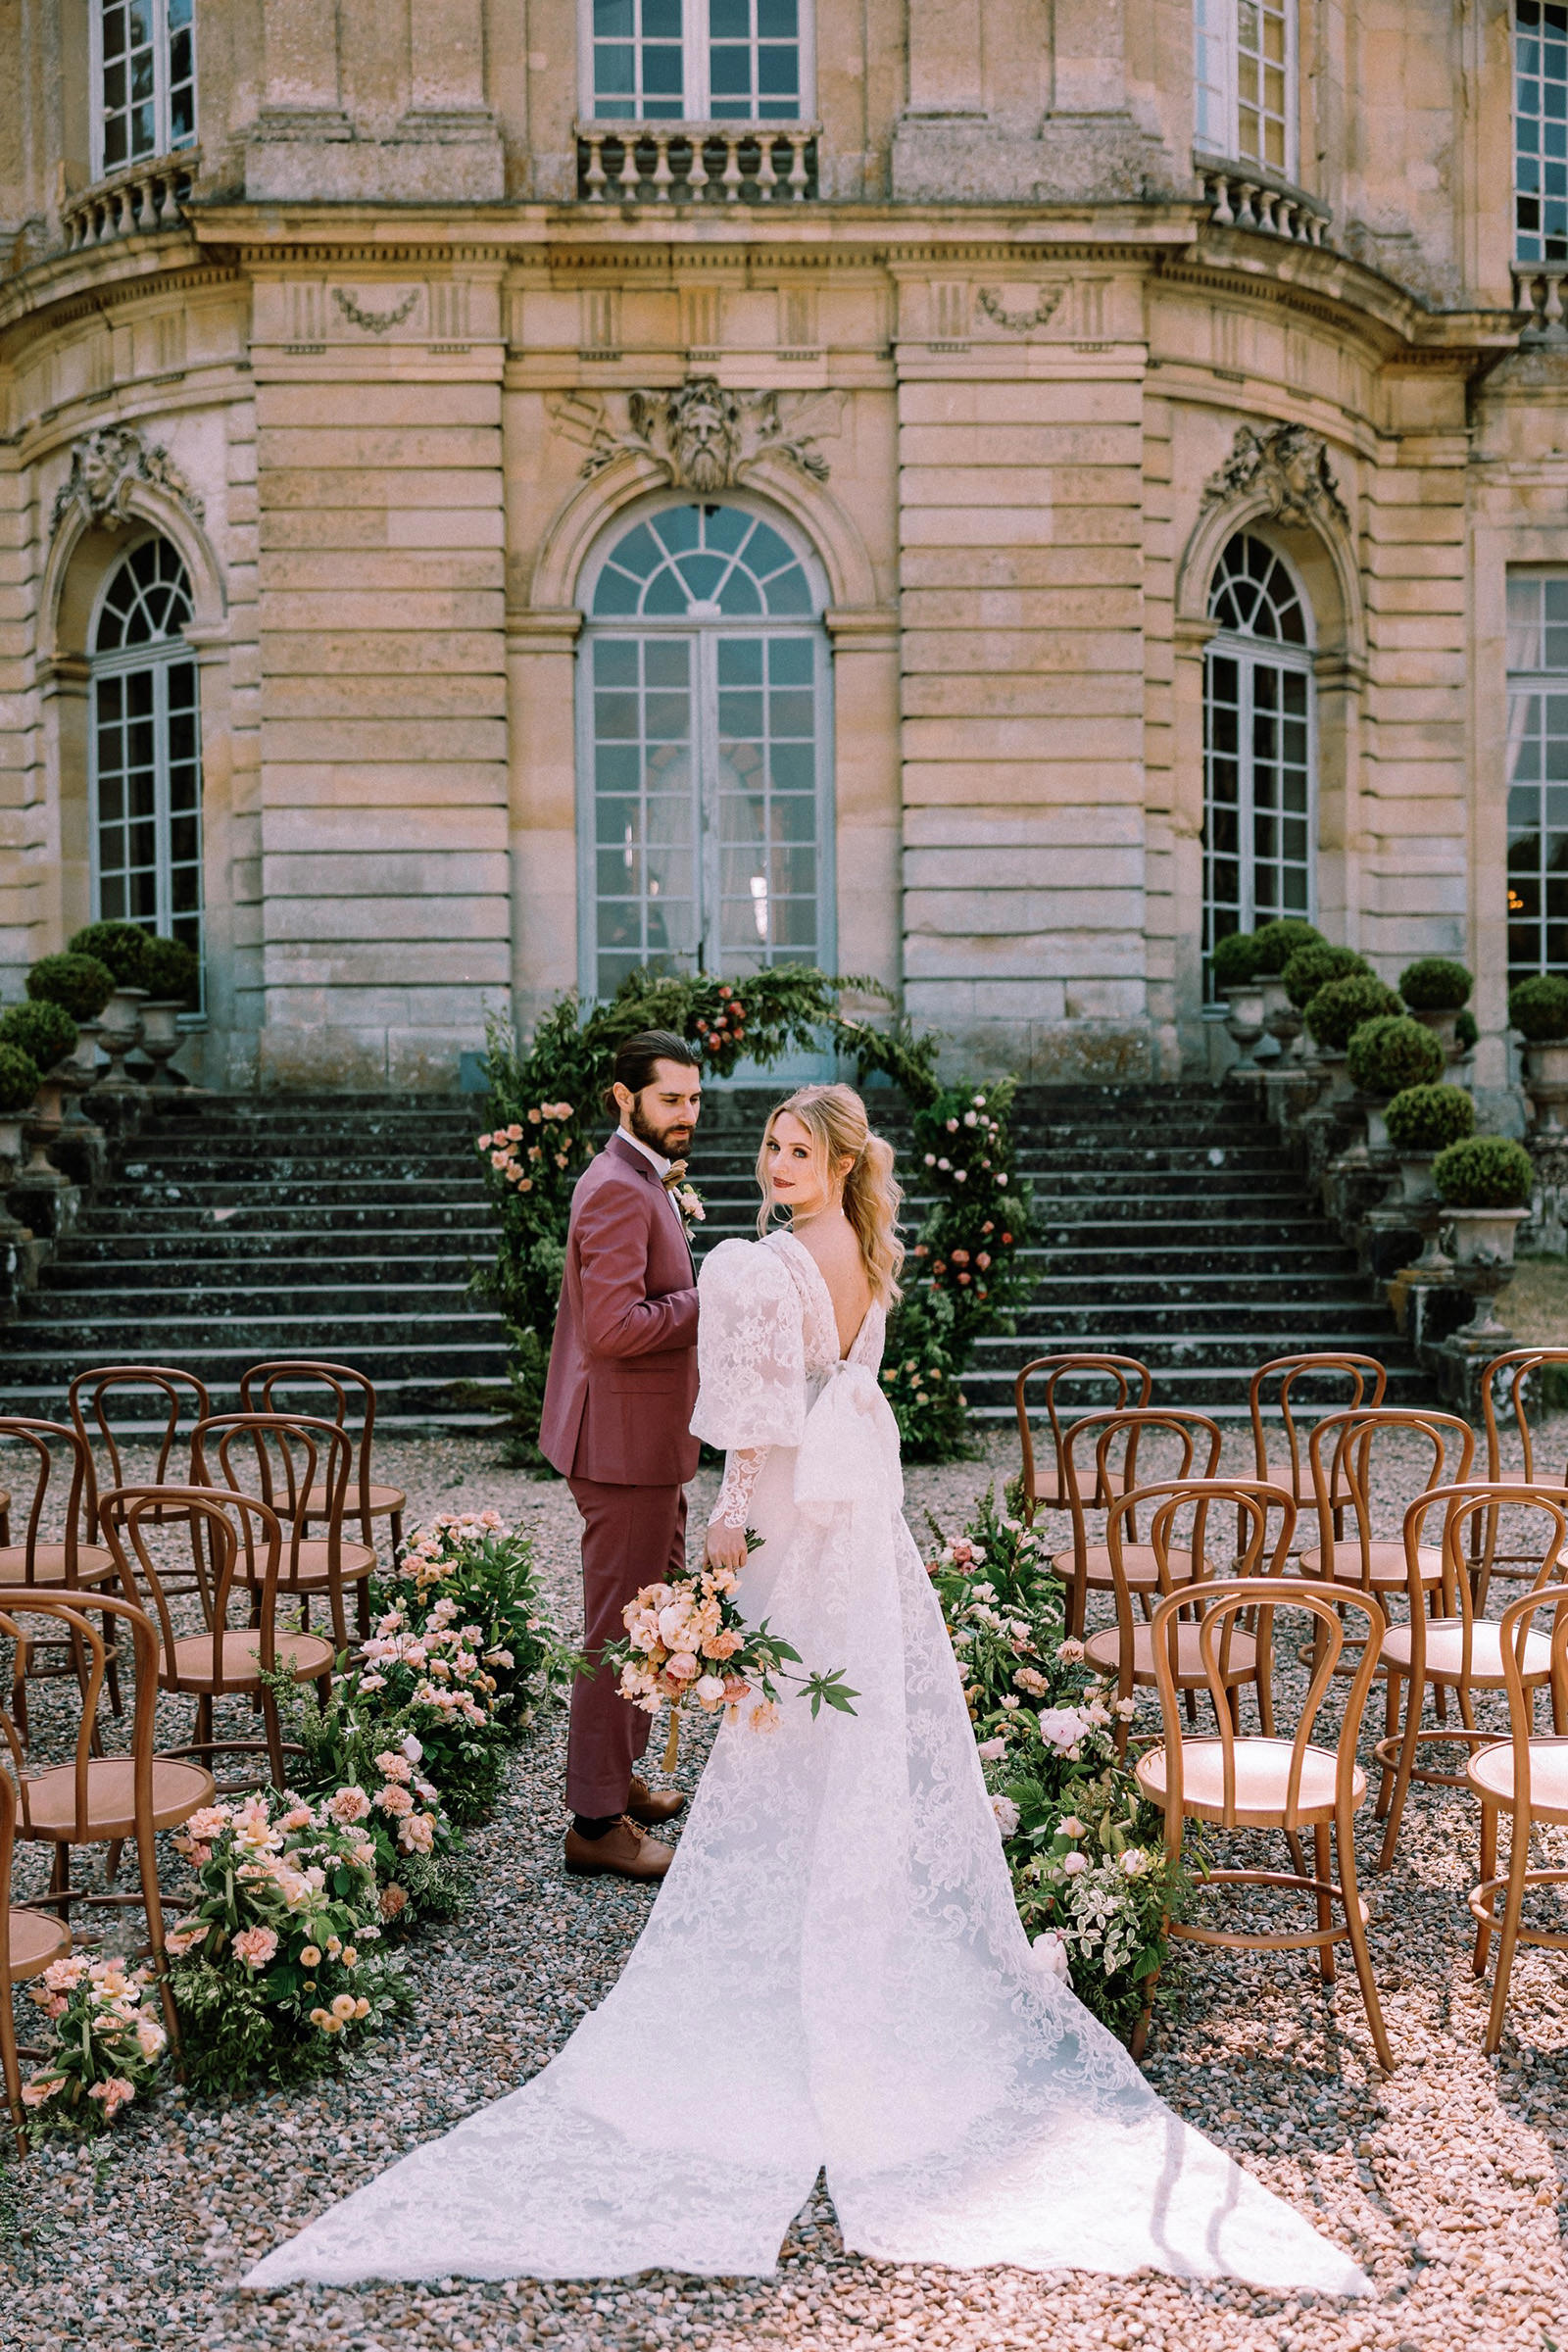  best wedding florist Paris